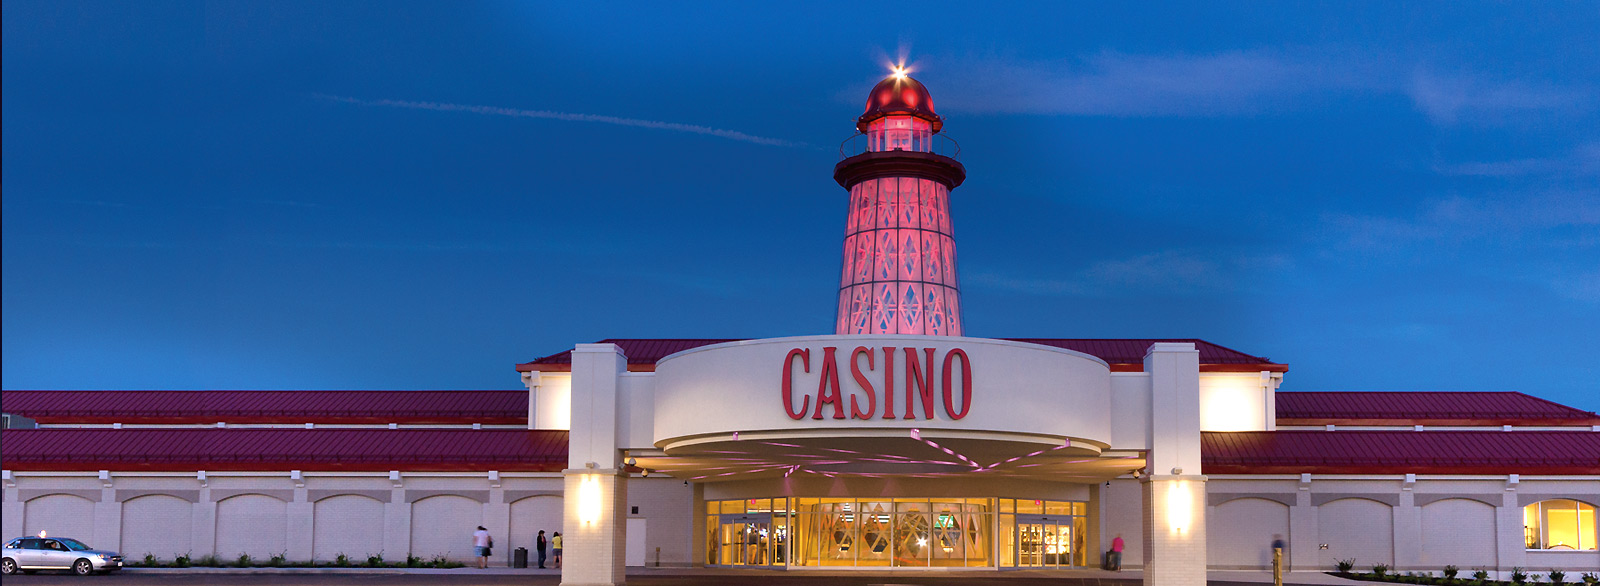 Casino New Brunswick stands illuminated against the darkened backdrop of light house at night.